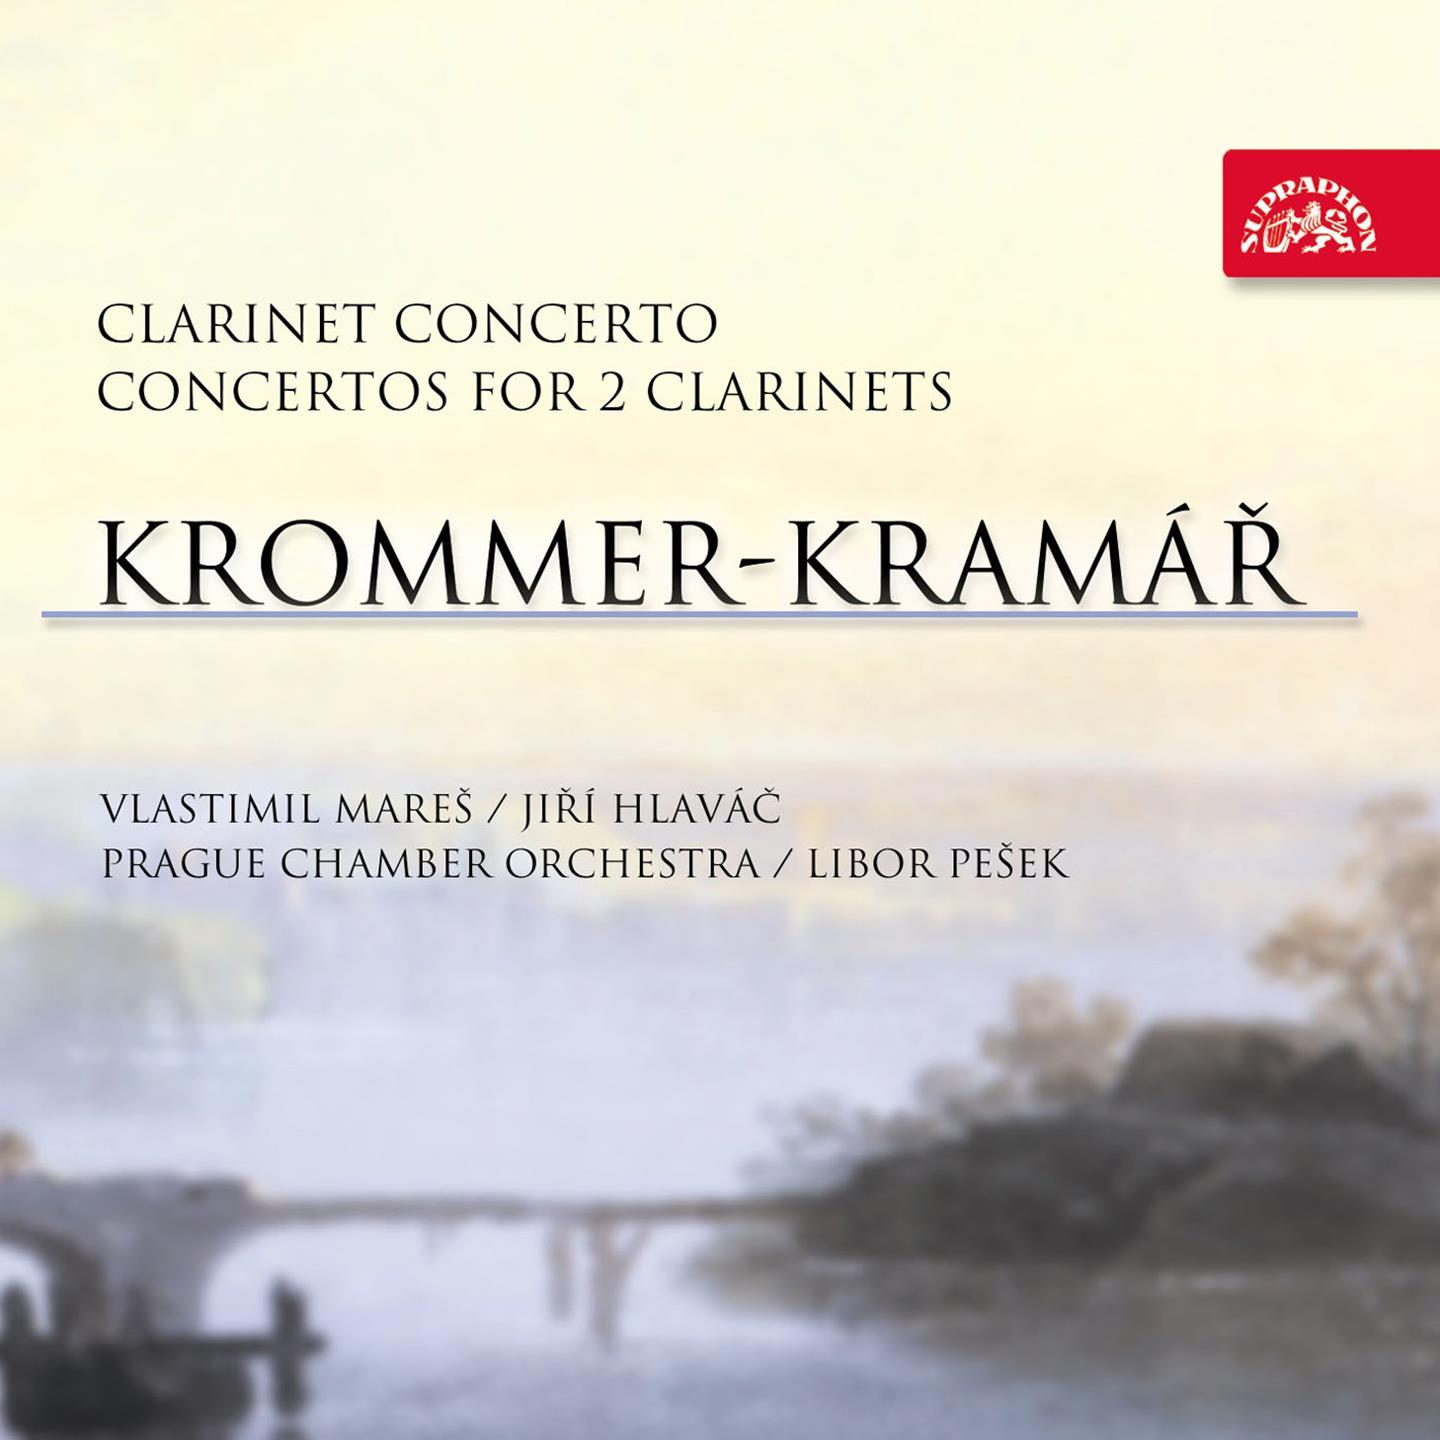 Clarinet Concerto No. 1 in E-Flat Major, Op. 36: I. Allegro